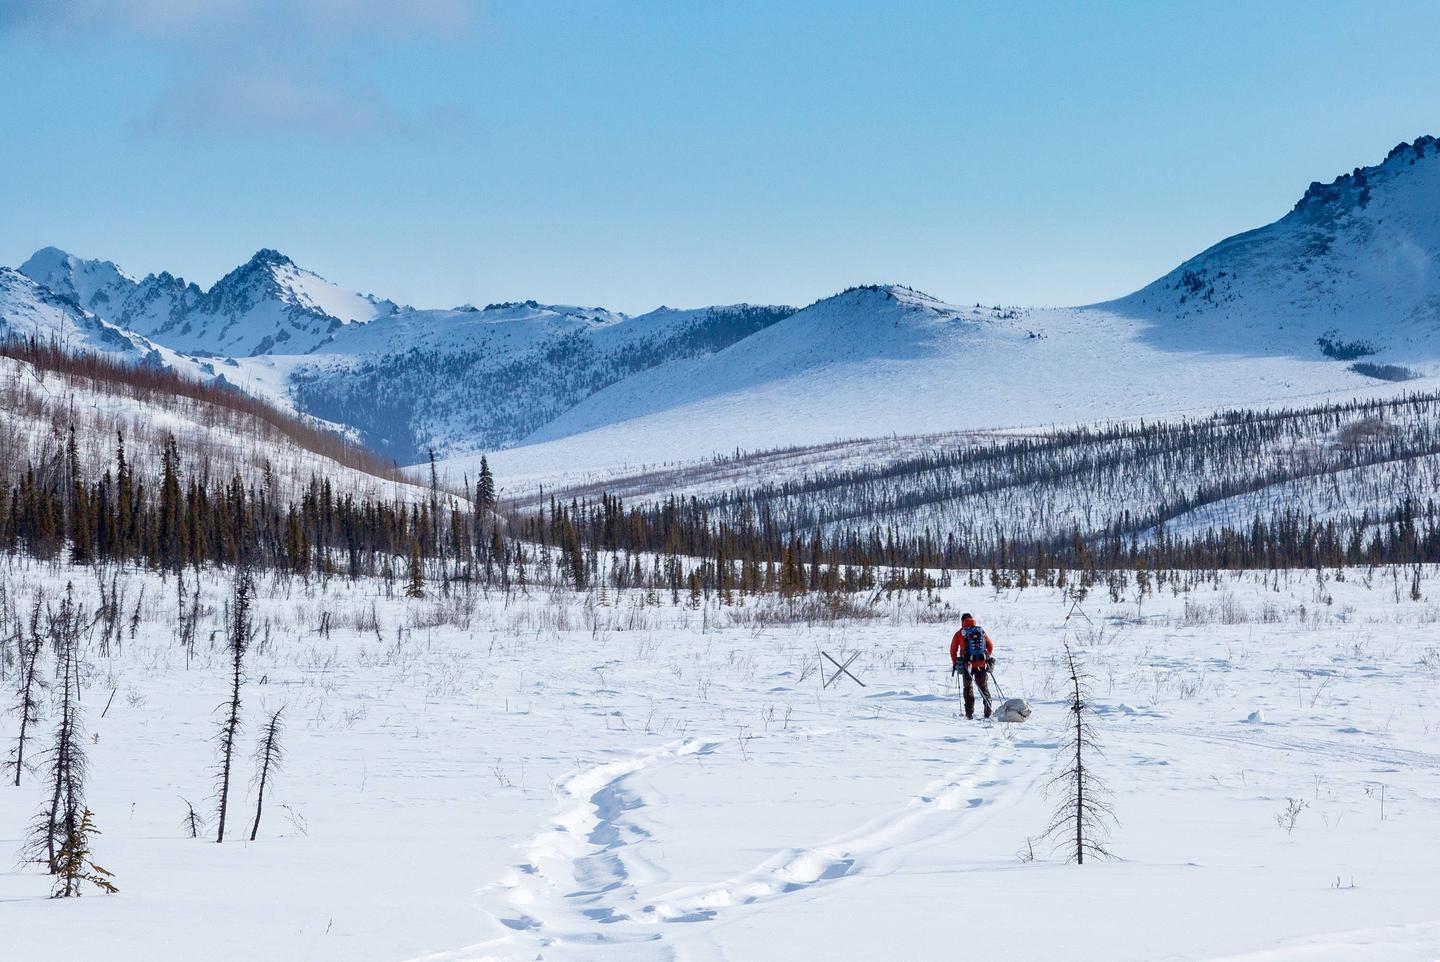 A skier pulling a sled follows a trail through snowy mountains.